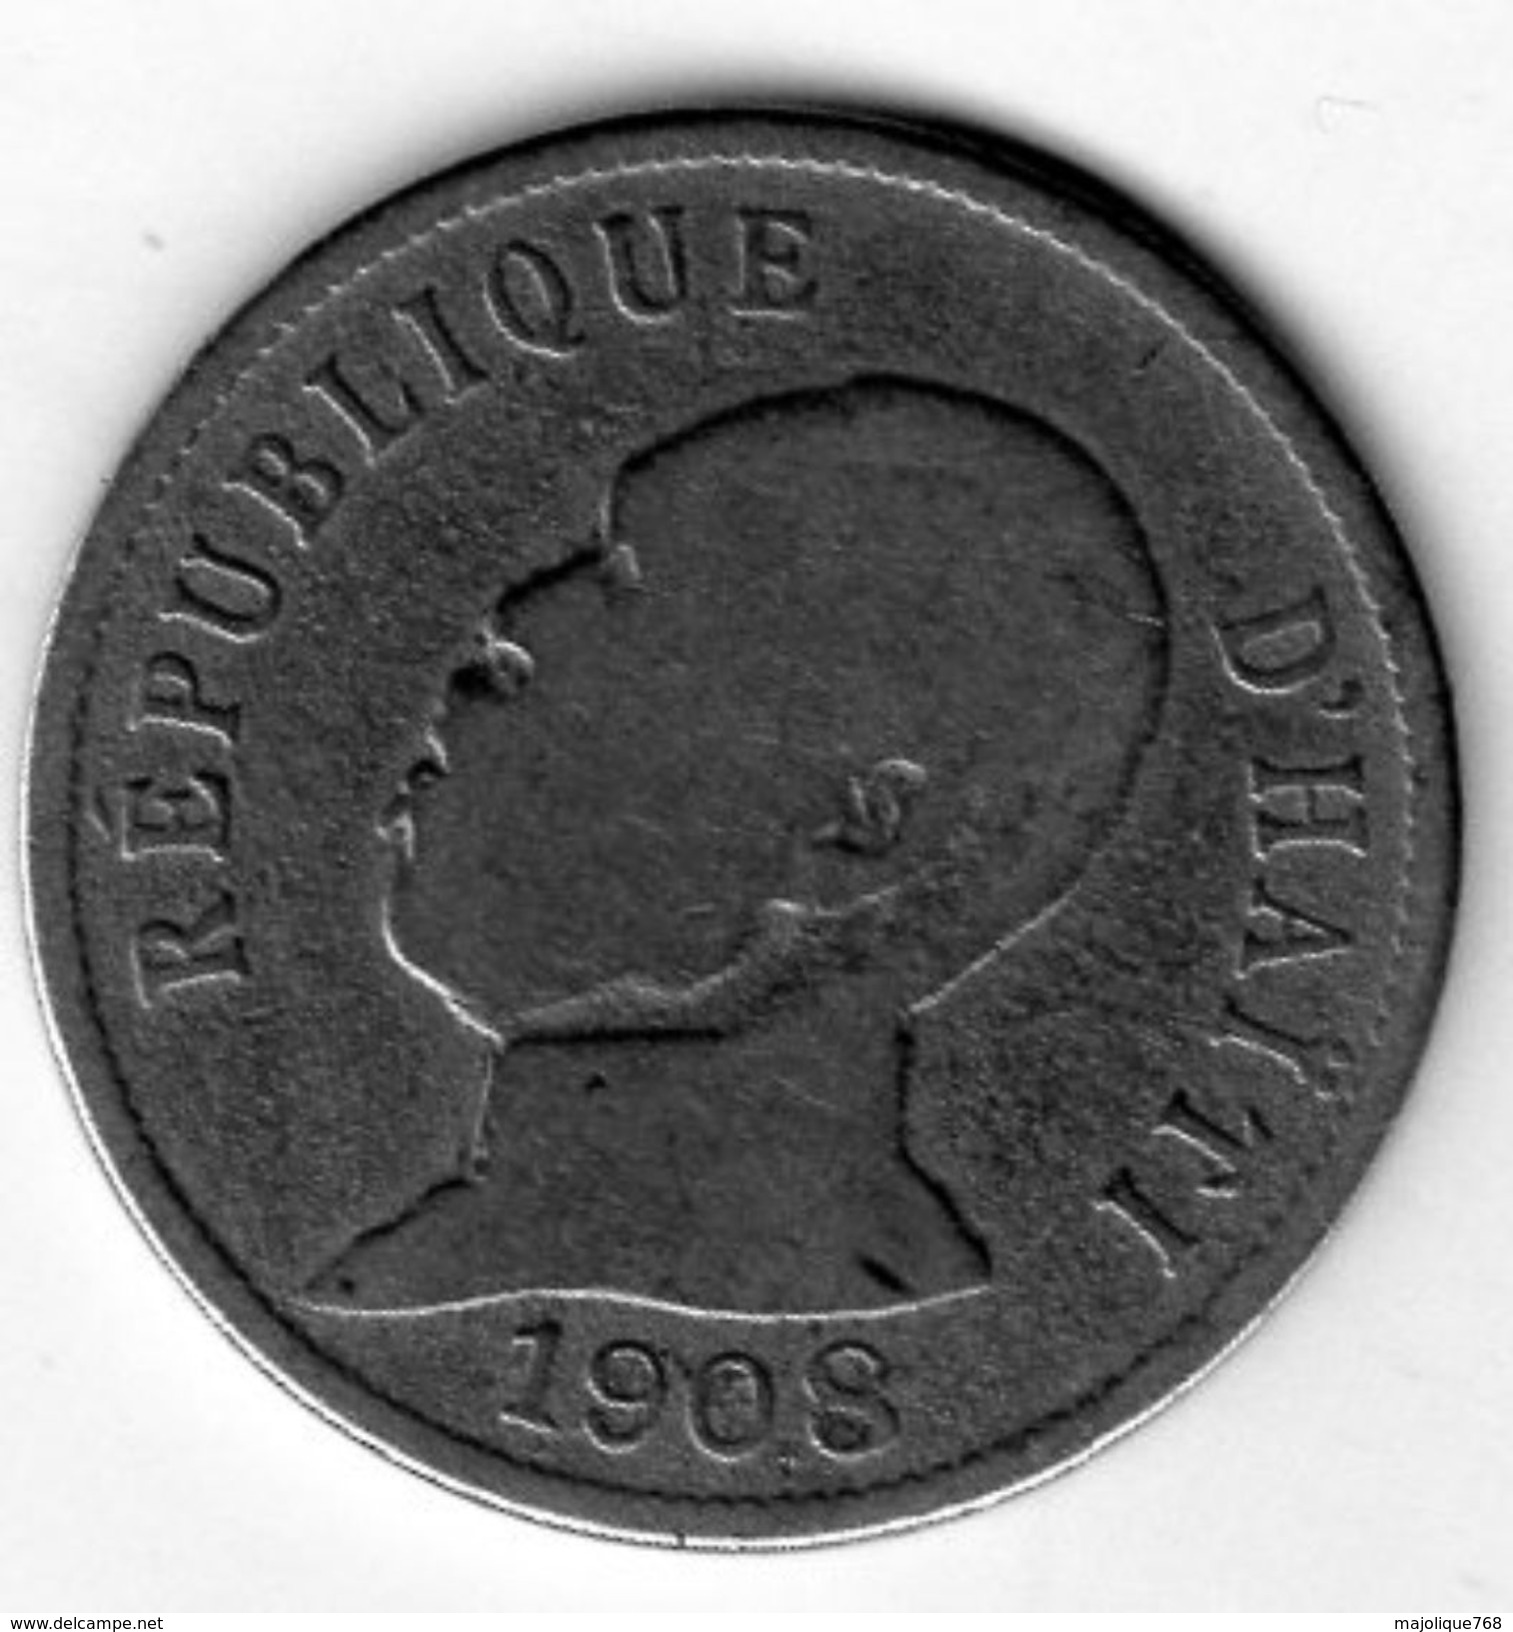 1 Pièce De Haiti - 50 Centimes 1908 En Nickel - B - - Caraïbes Orientales (Etats Des)